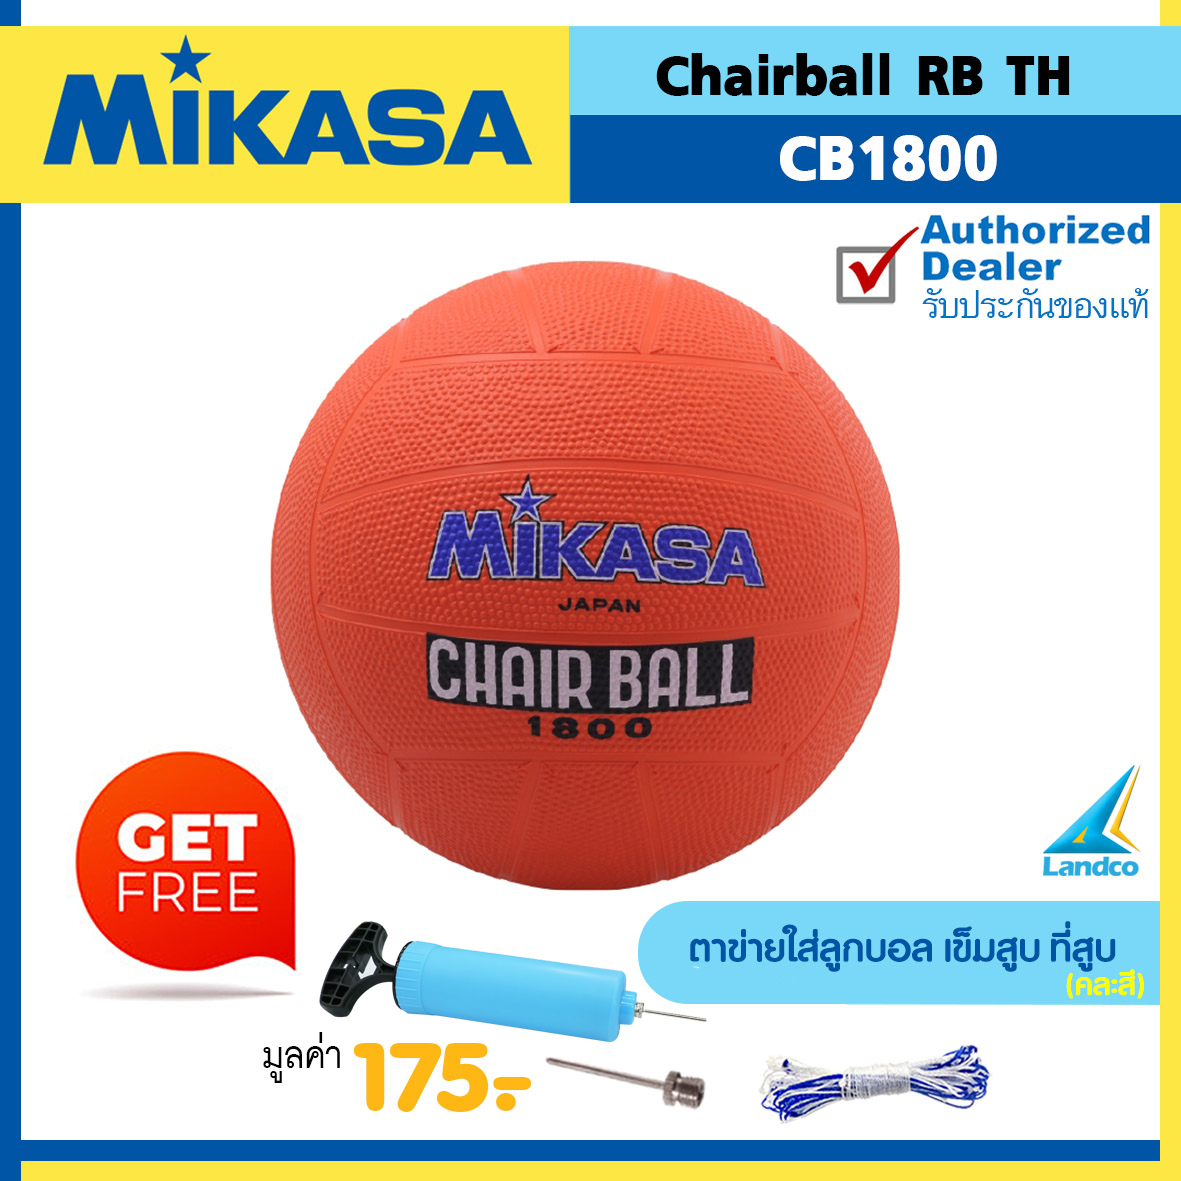 MIKASA แชร์บอลยาง Chairball RB th CB1800 #5 (435) Size 5 (แถมฟรี ตาข่ายใส่ลูกบอล + เข็มสูบ + สูบลมมือ SPL)